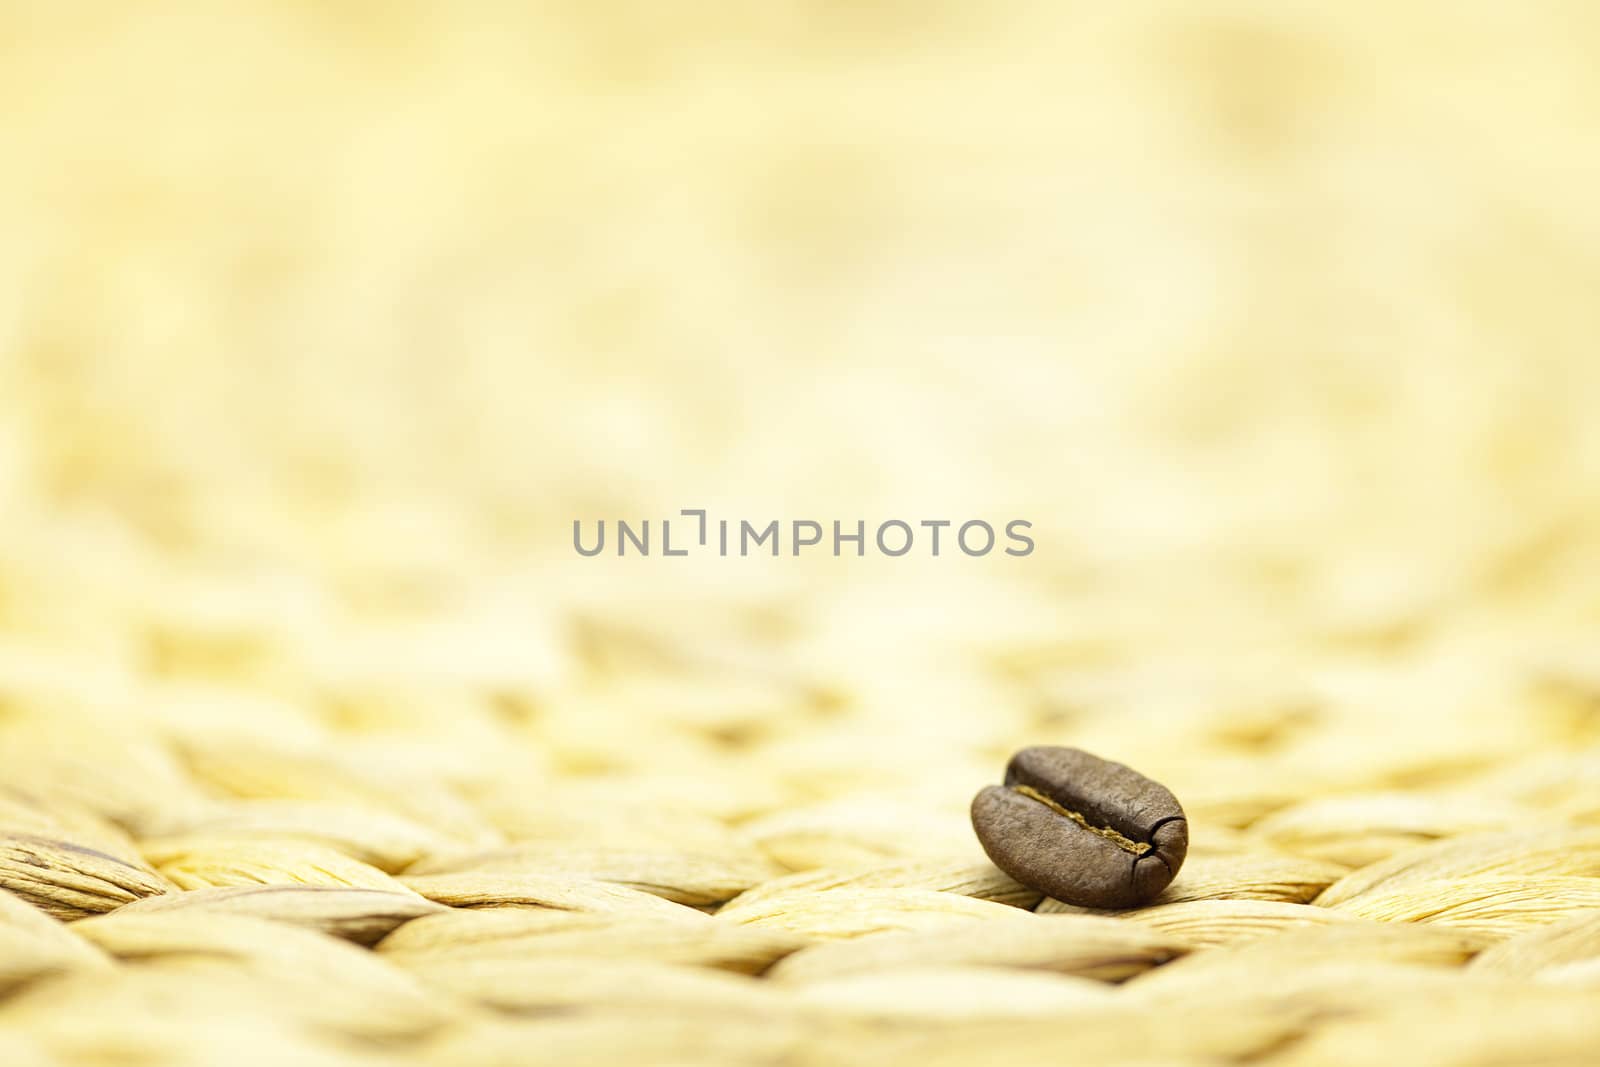 coffee beans on a wicker mat